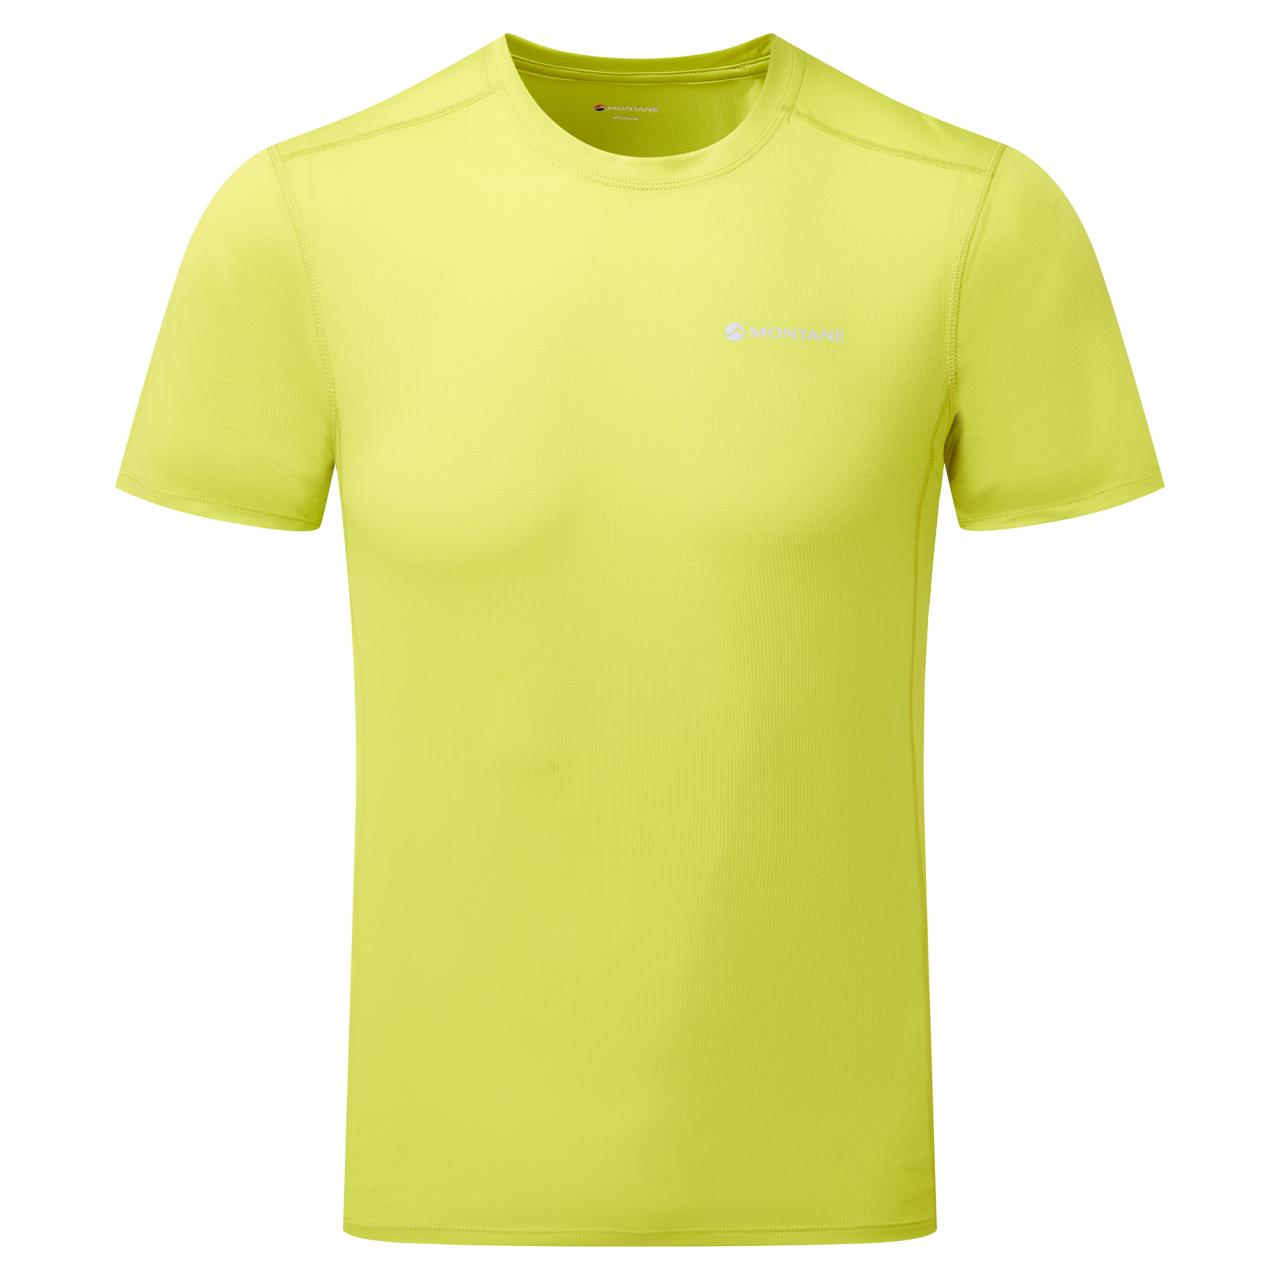 DART LITE T-SHIRT-CITRUS SPRING-S pánské tričko žlutozelené